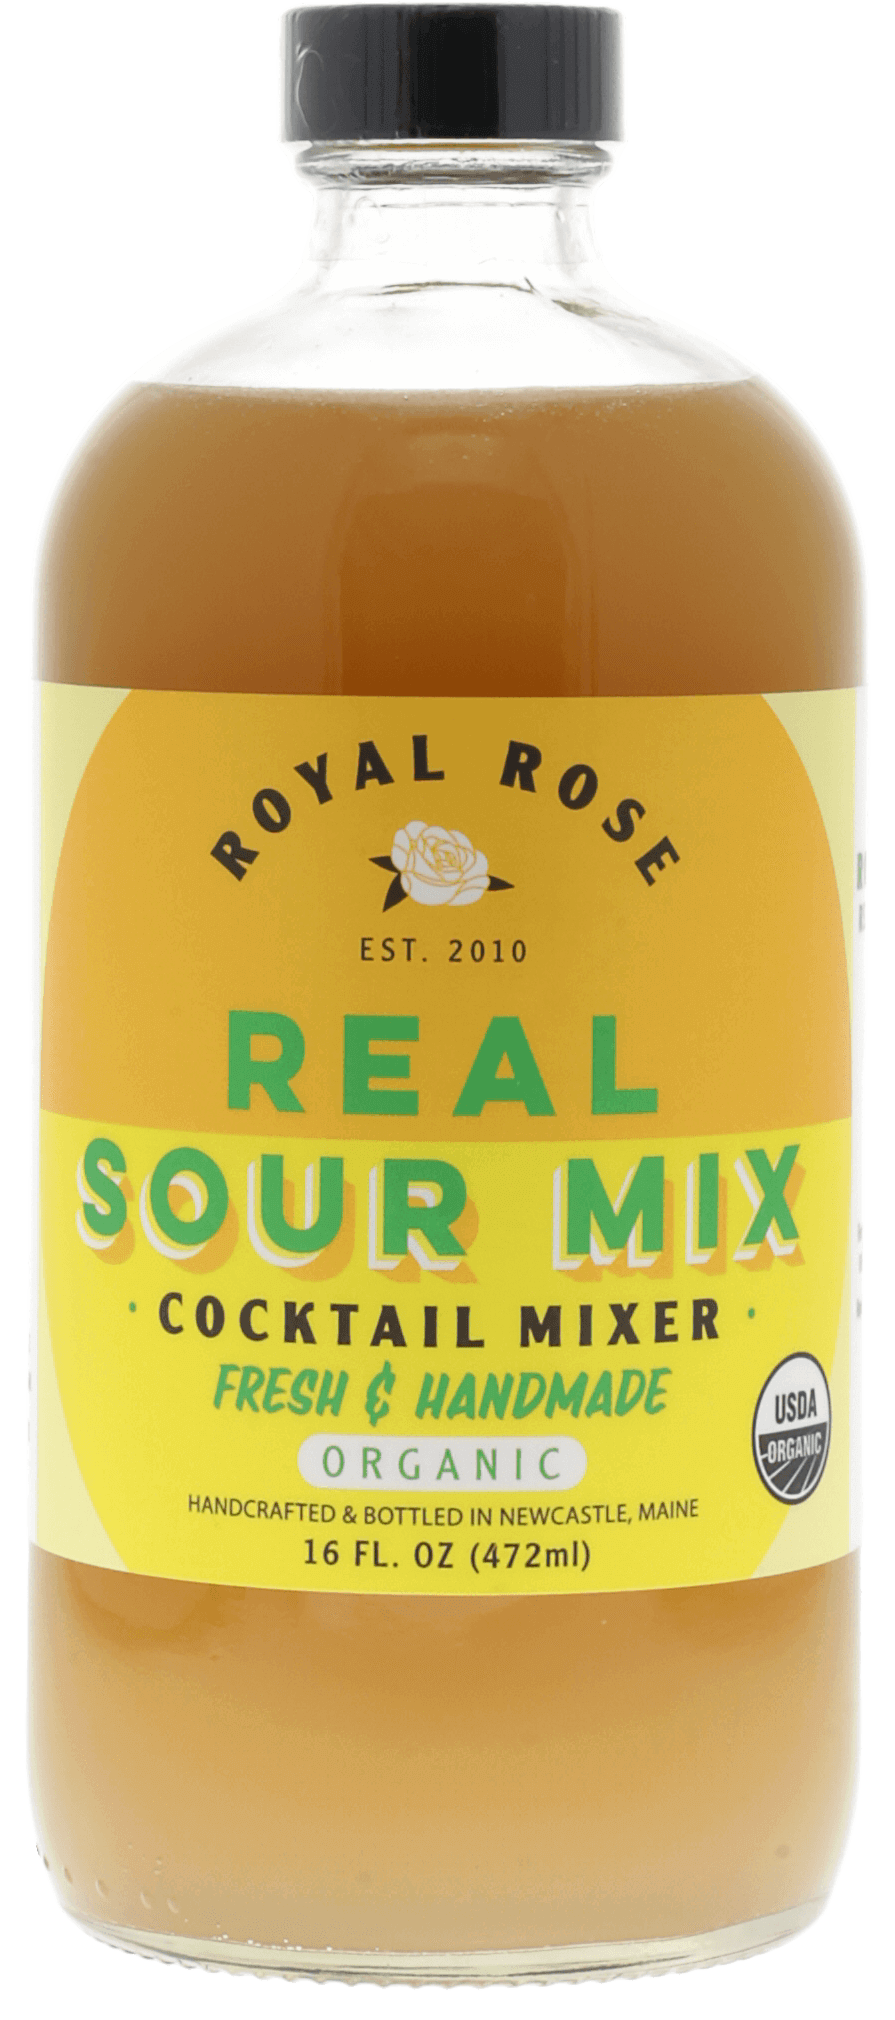 Real Organic Sour Mix